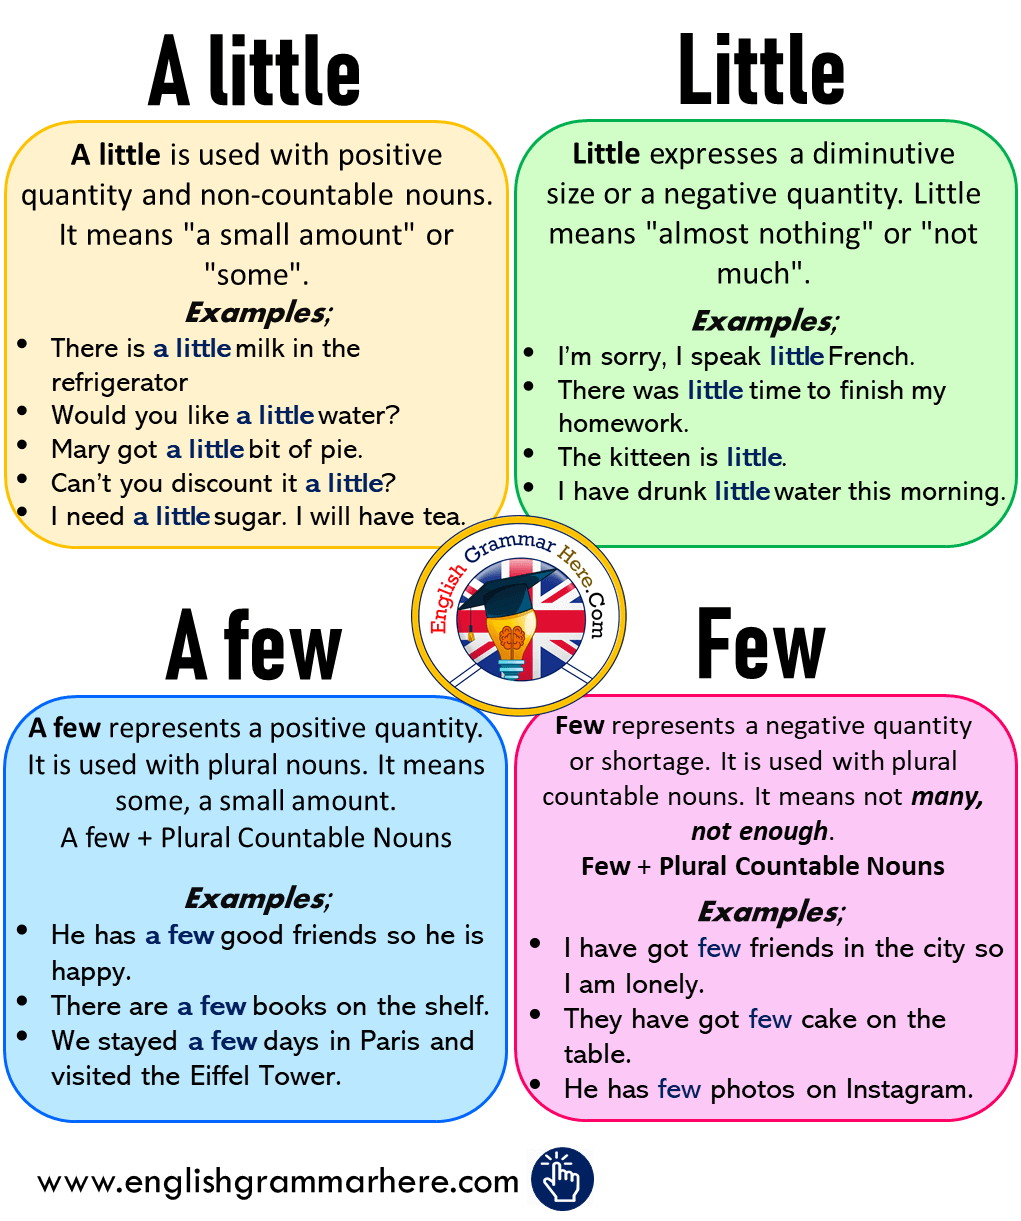 Using A little - Little - A few - Few and Example Sentences